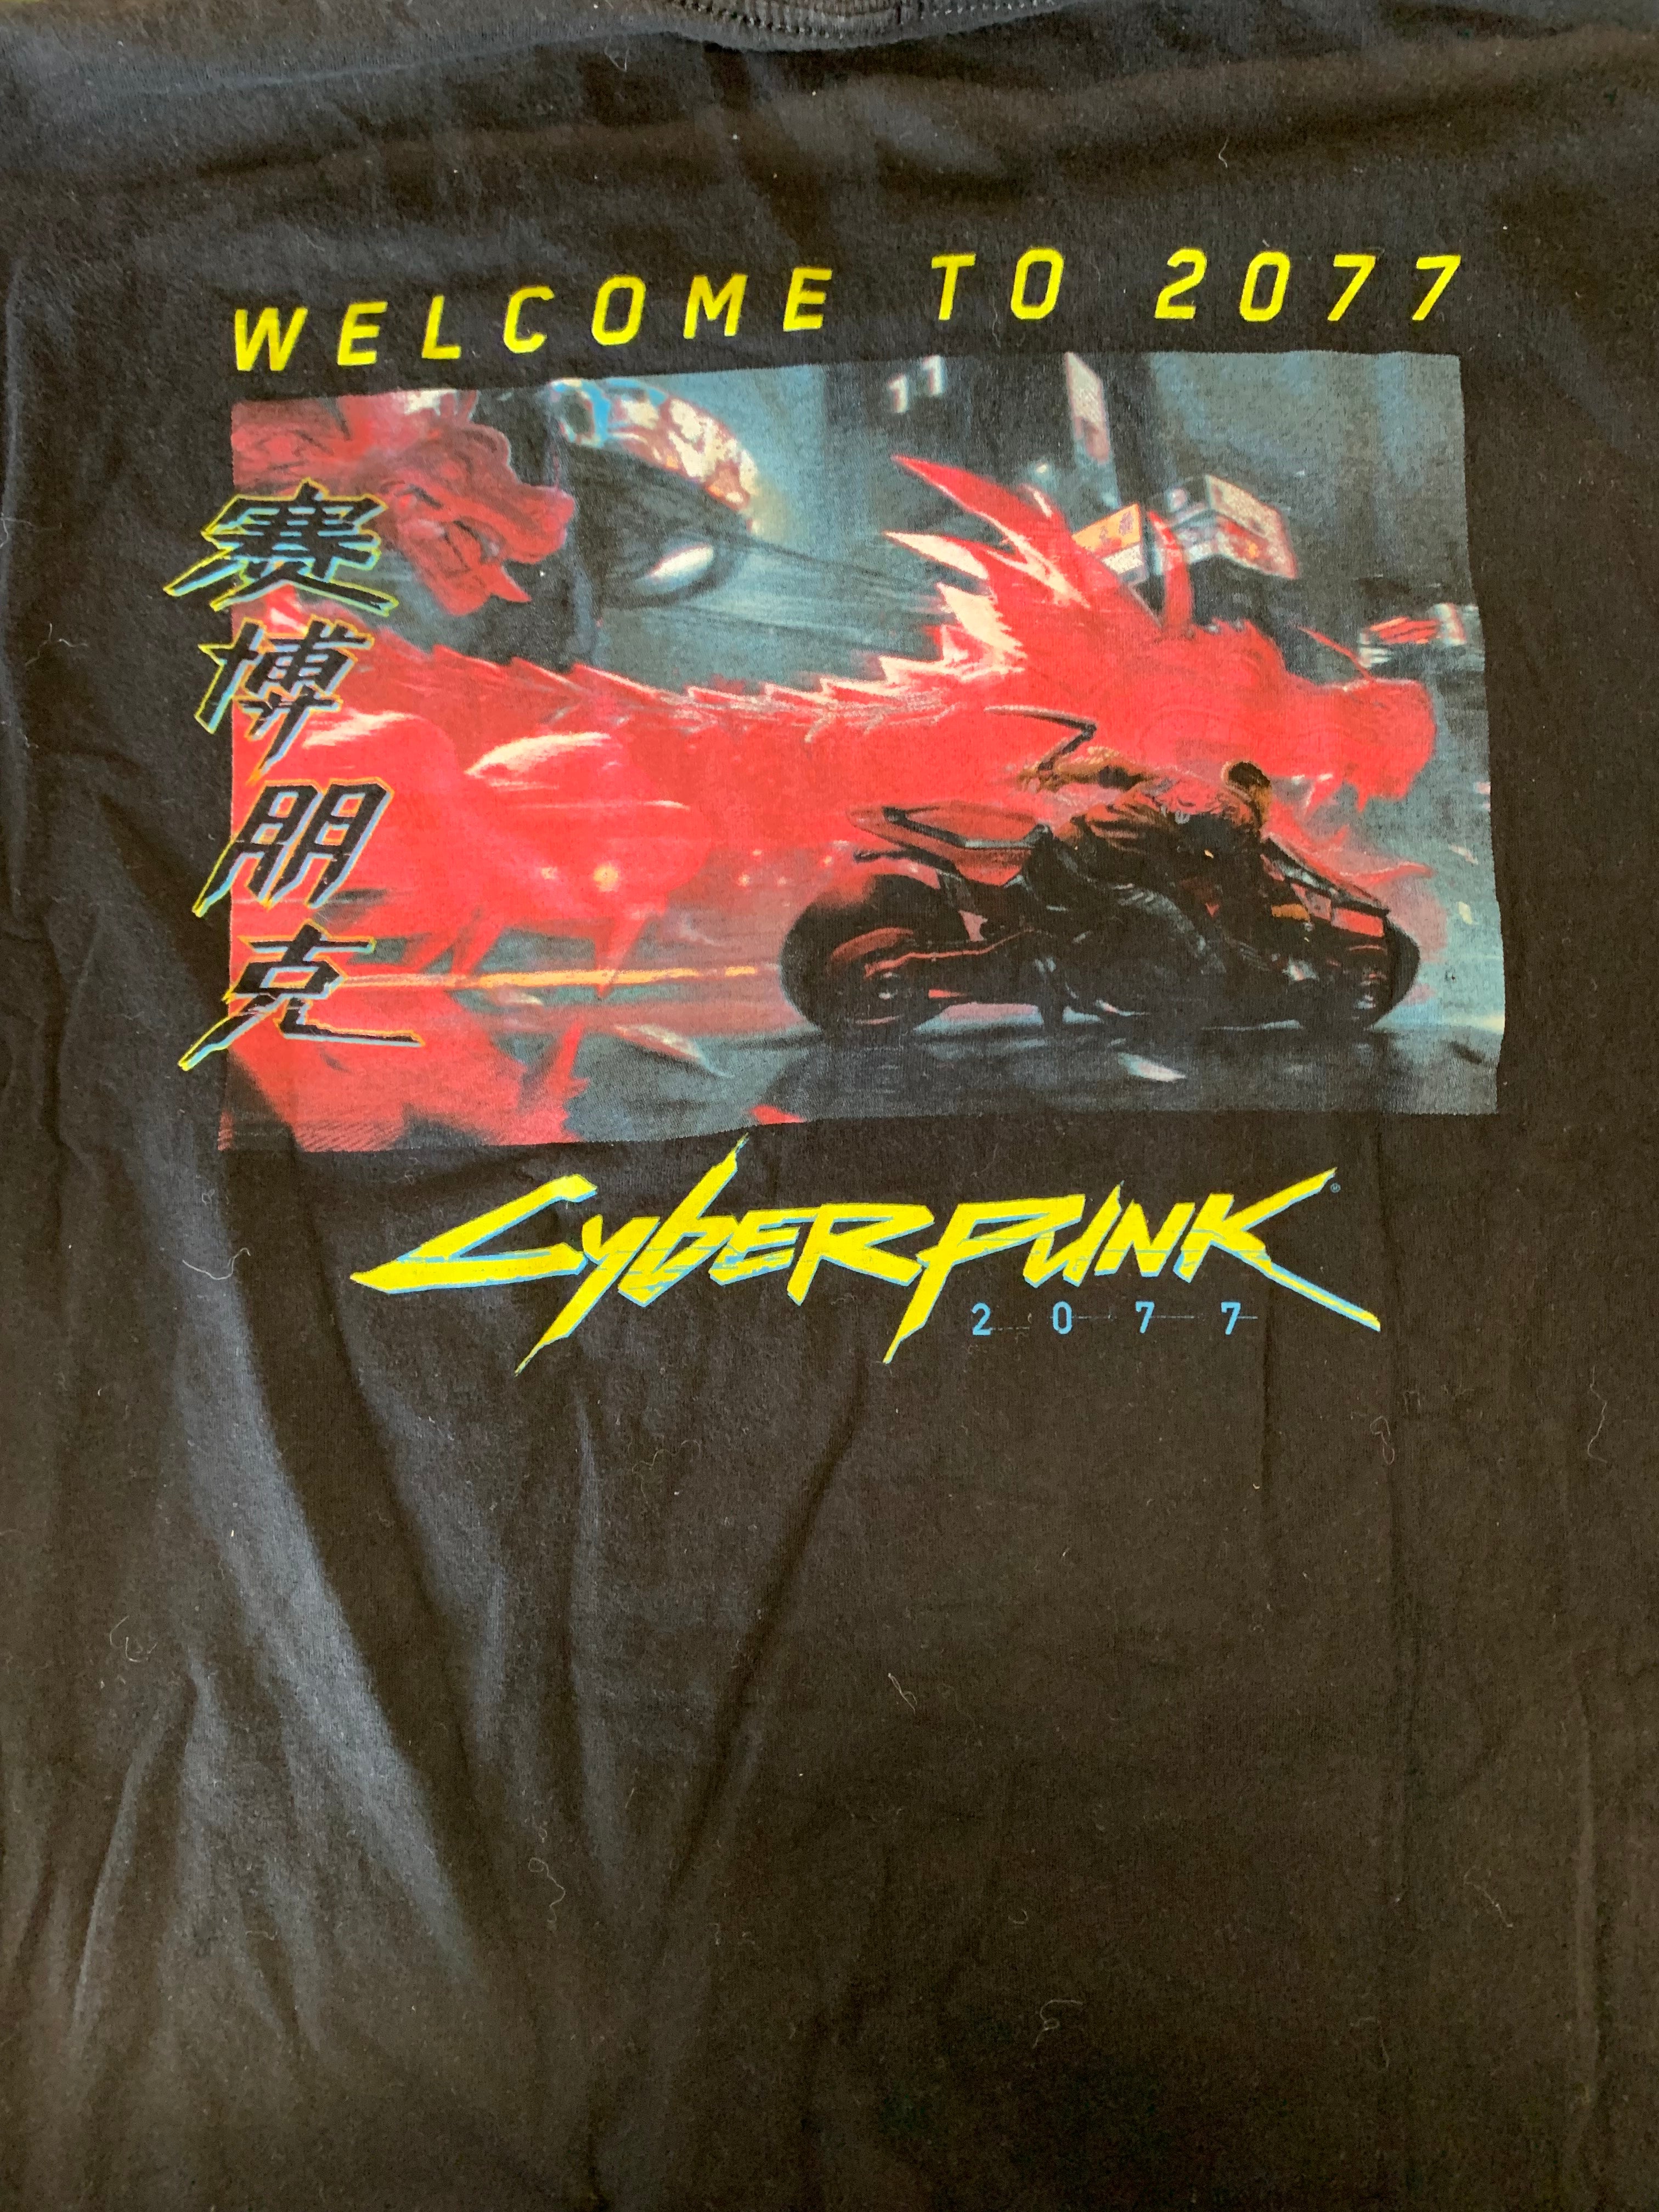 Cyberpunk 2077 Welcome To 2077 T-Shirt, Black, M